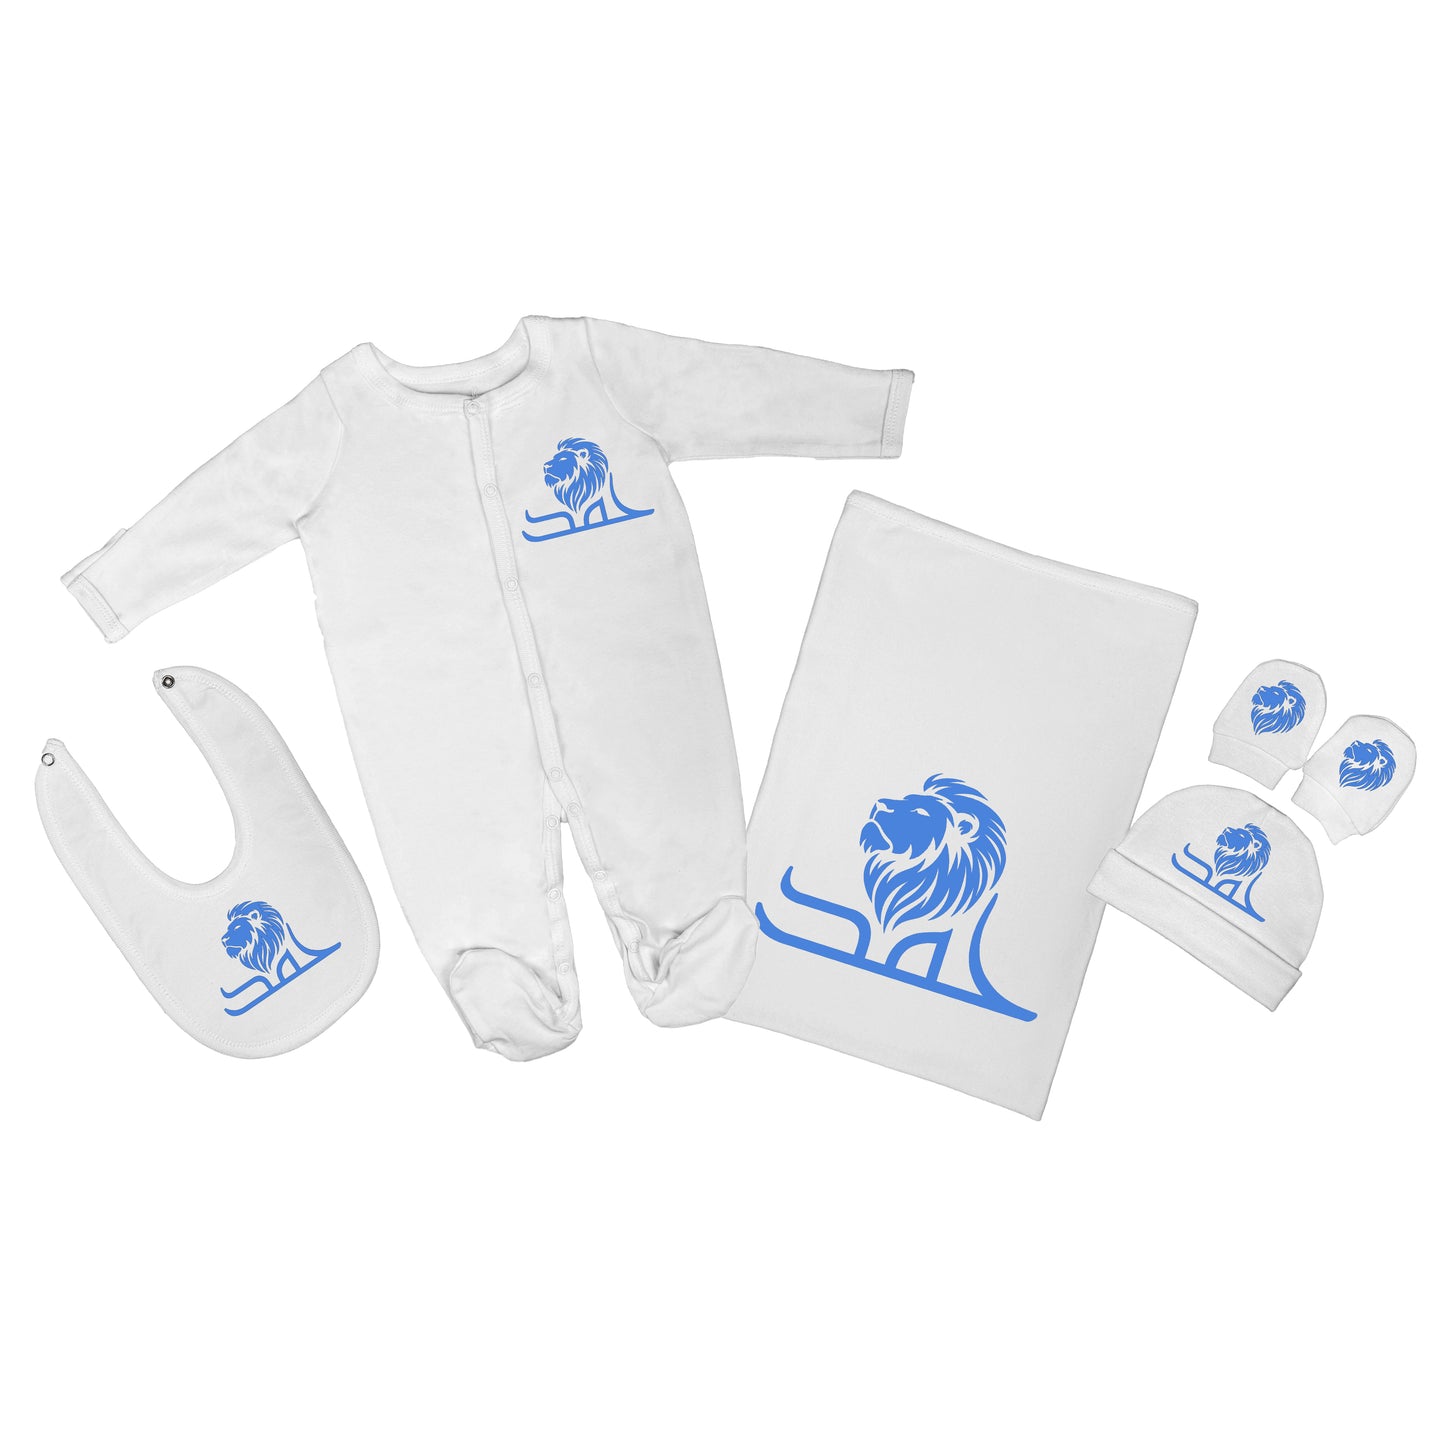 Personalized Baby Clothing Set (Blanket, Sleepsuit, Beanie, Bib, Mittens) - Lion